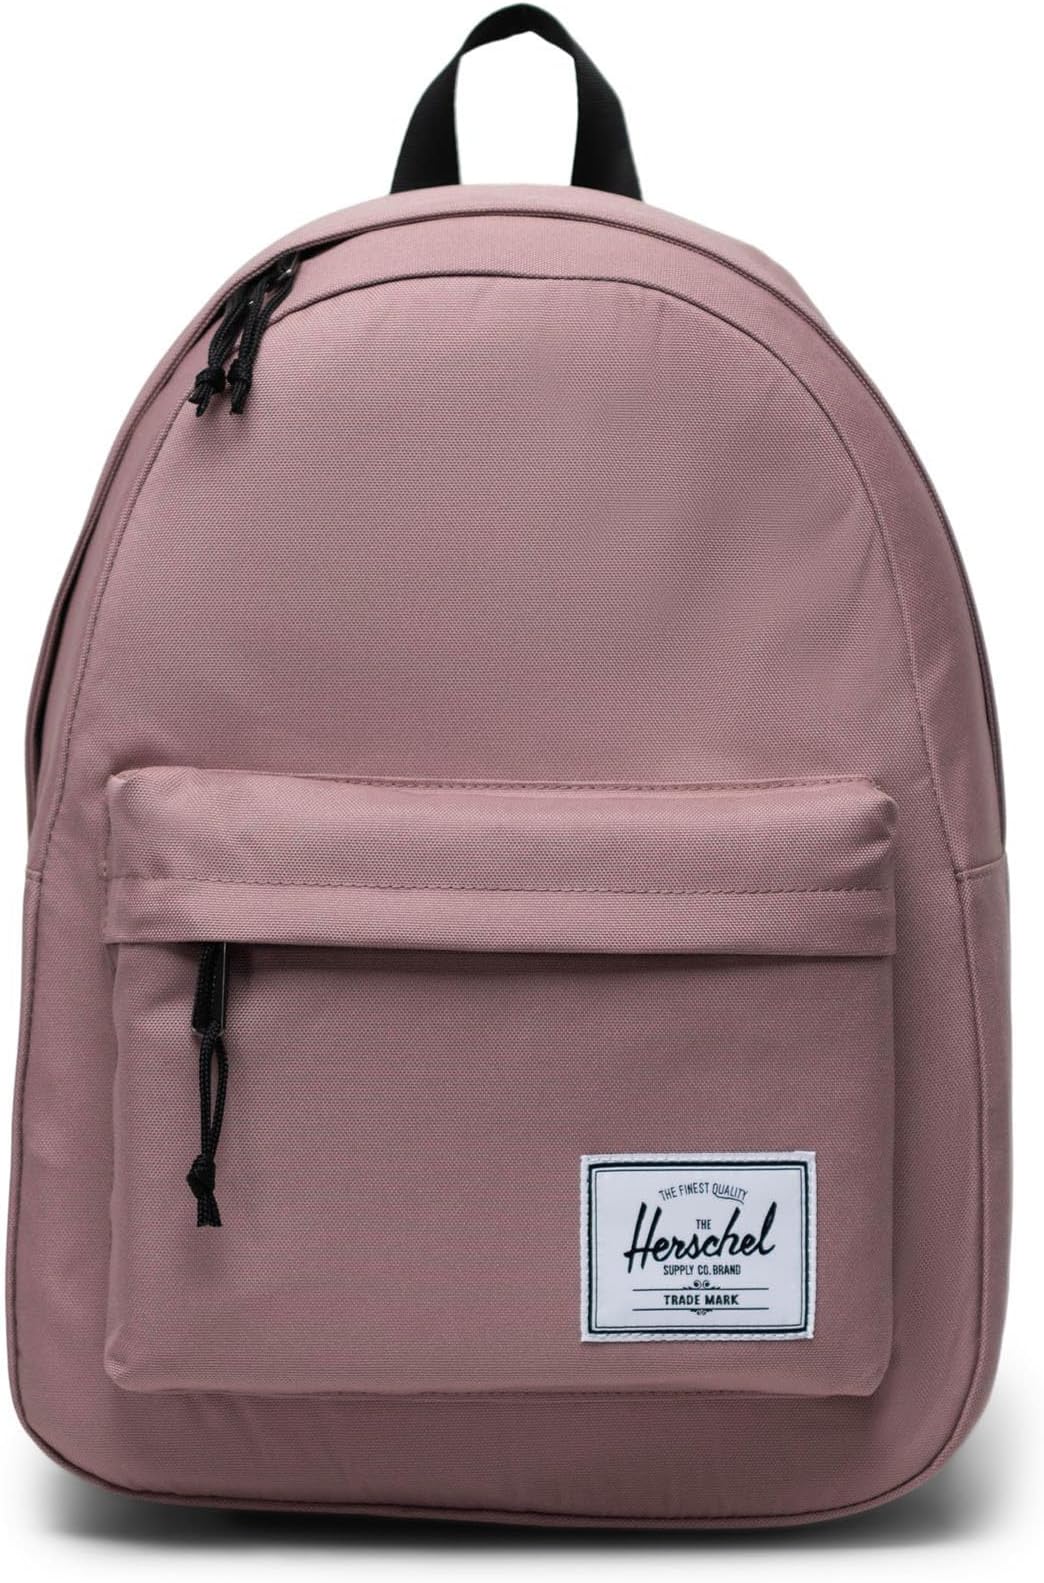 сумка heritage crossbody herschel supply co цвет ash rose Рюкзак Classic Backpack Herschel Supply Co., цвет Ash Rose